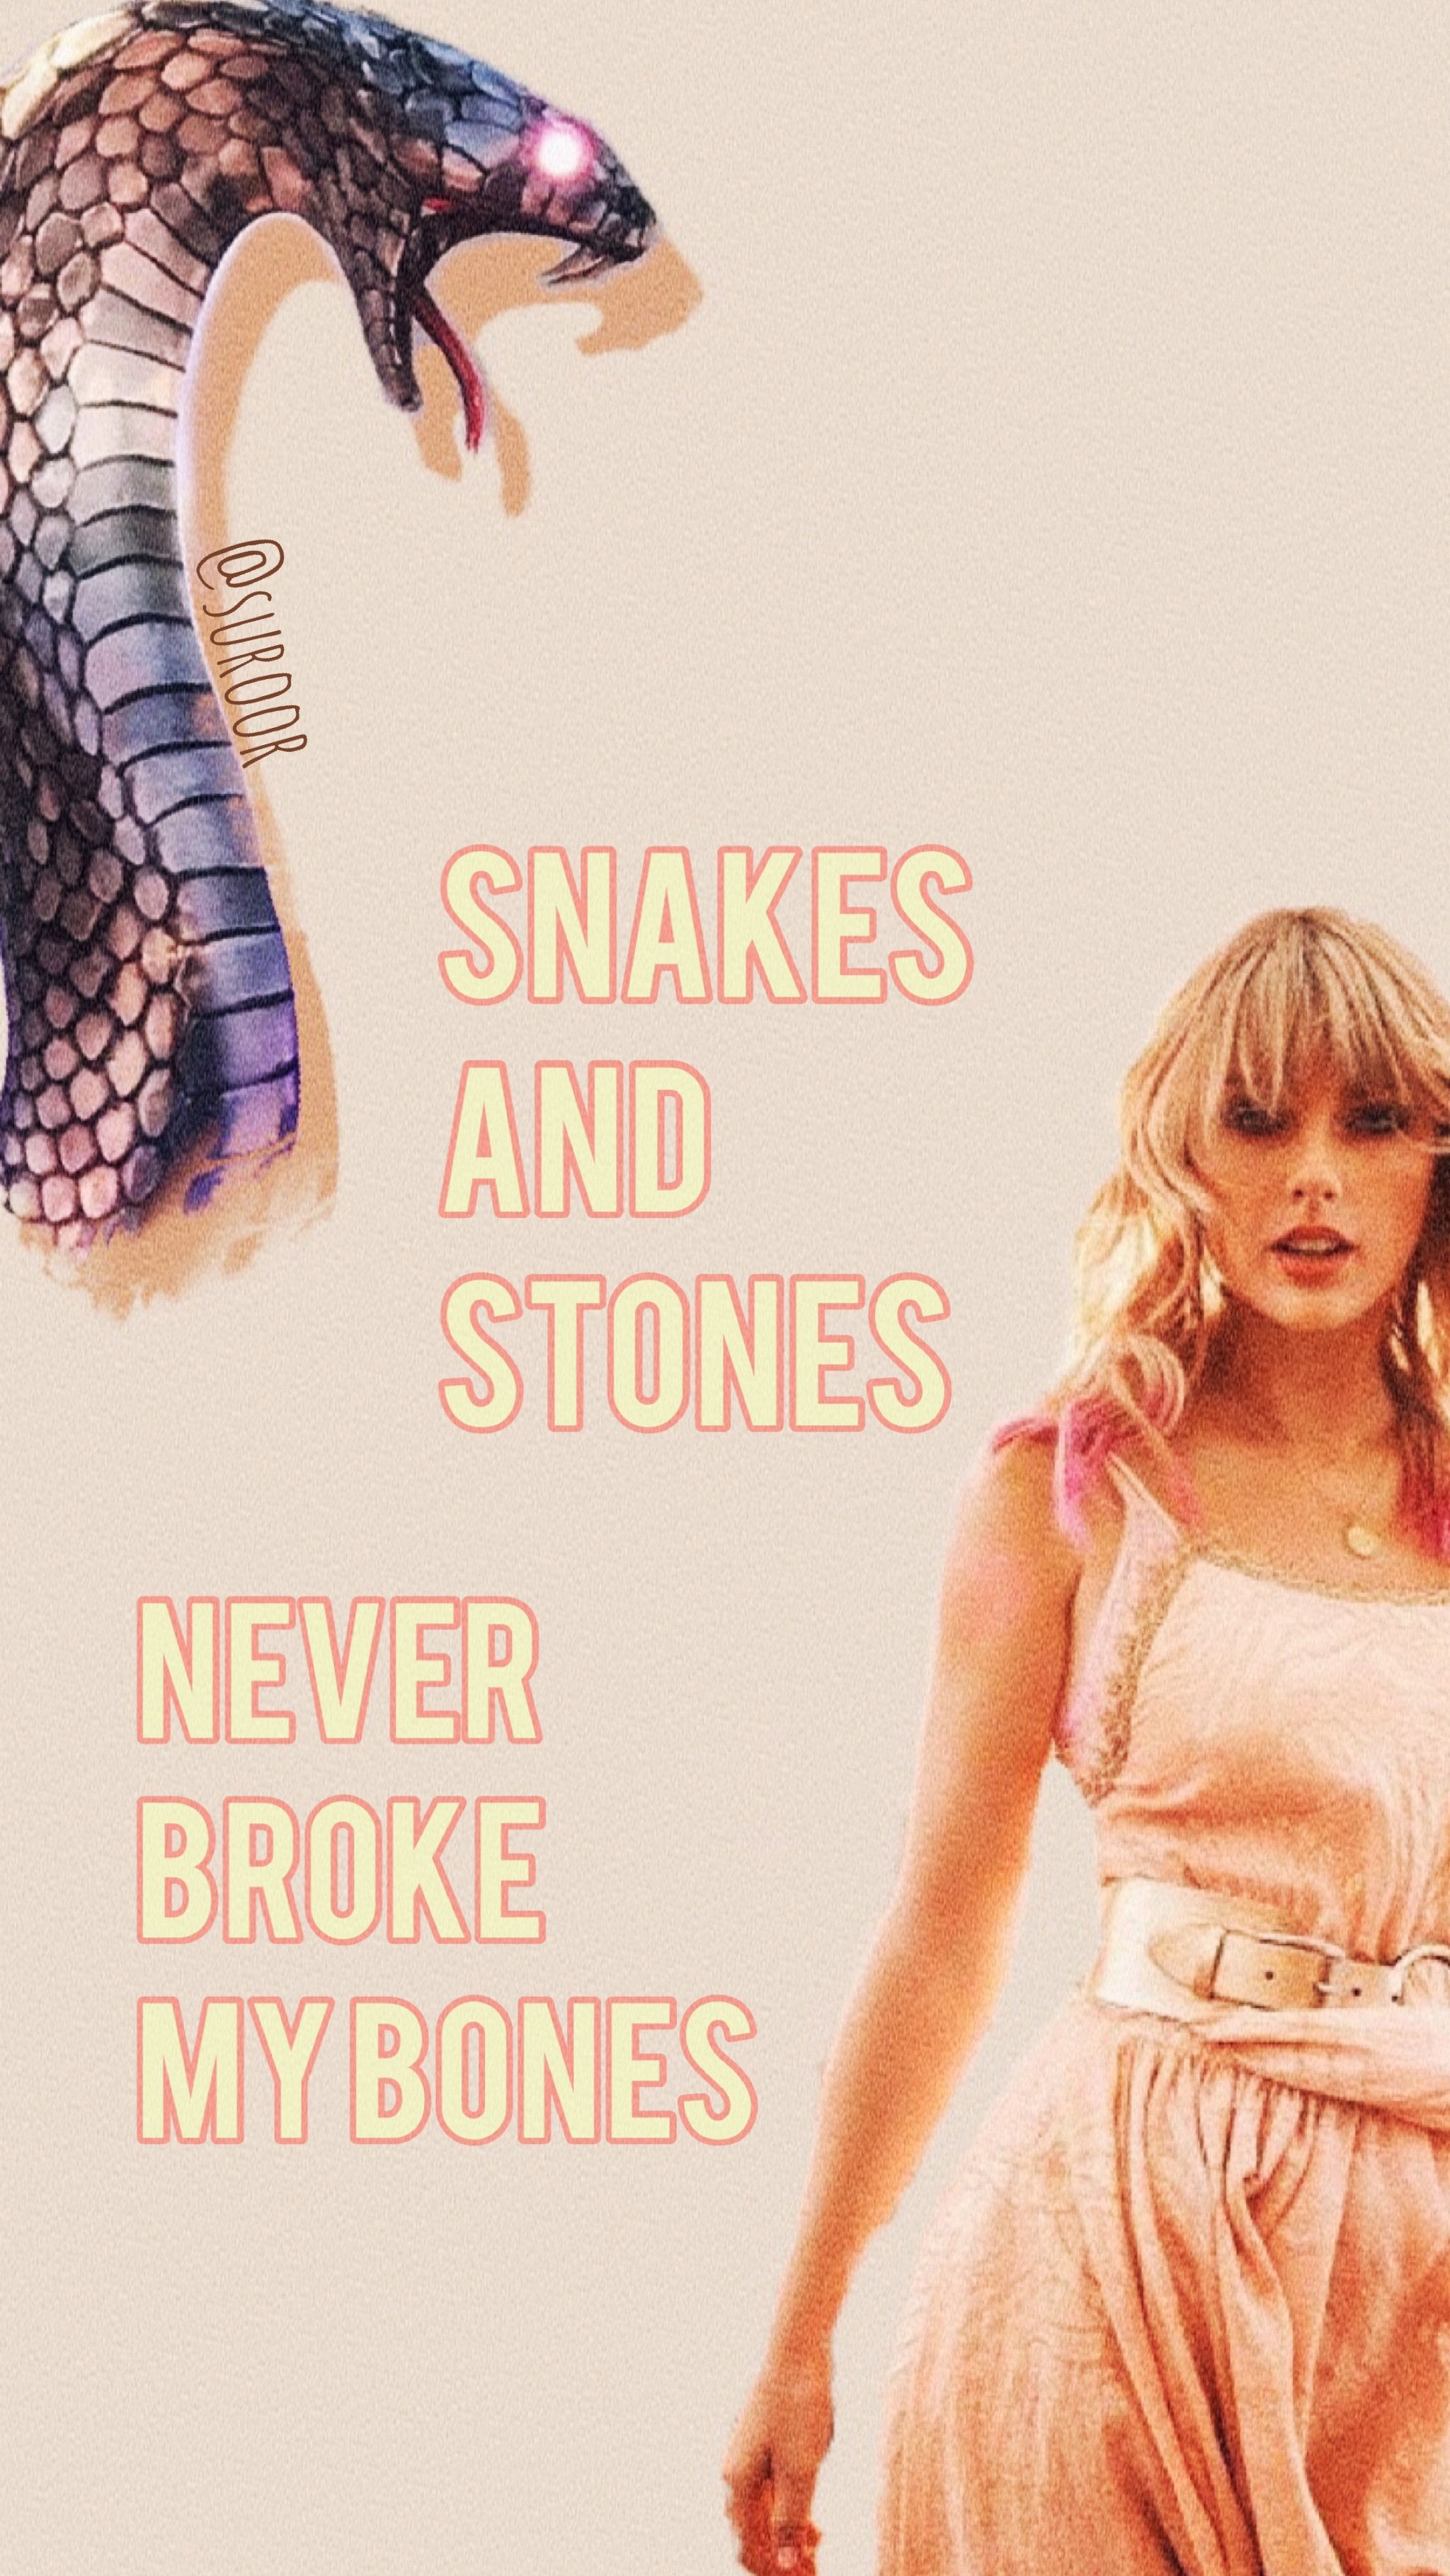 Taylor Swift need to calm down lyrics. Taylor swift songs